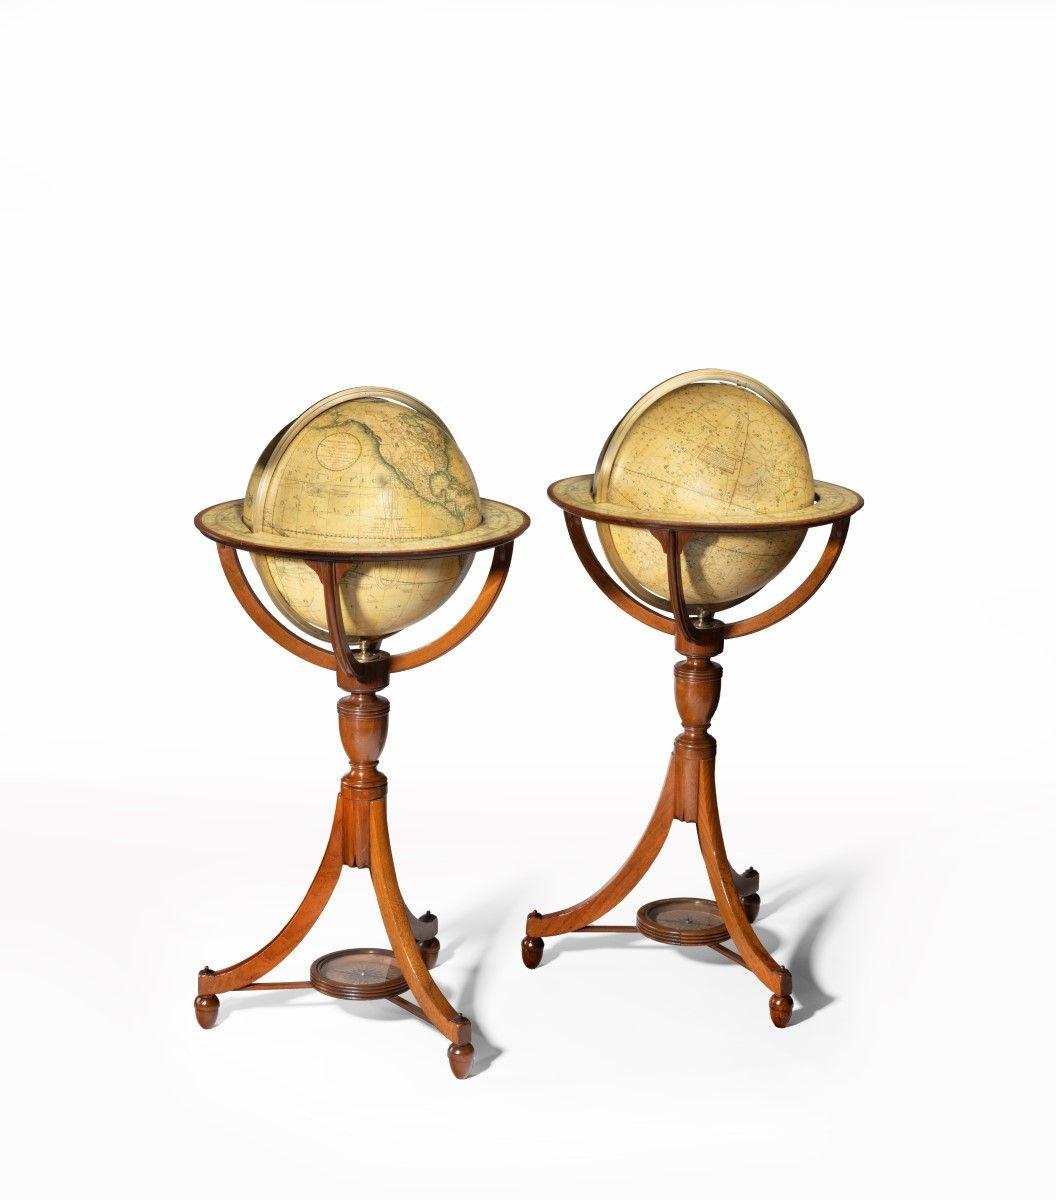 Pair of George III J & W Cary’s 12 inch Floor Globes 1800